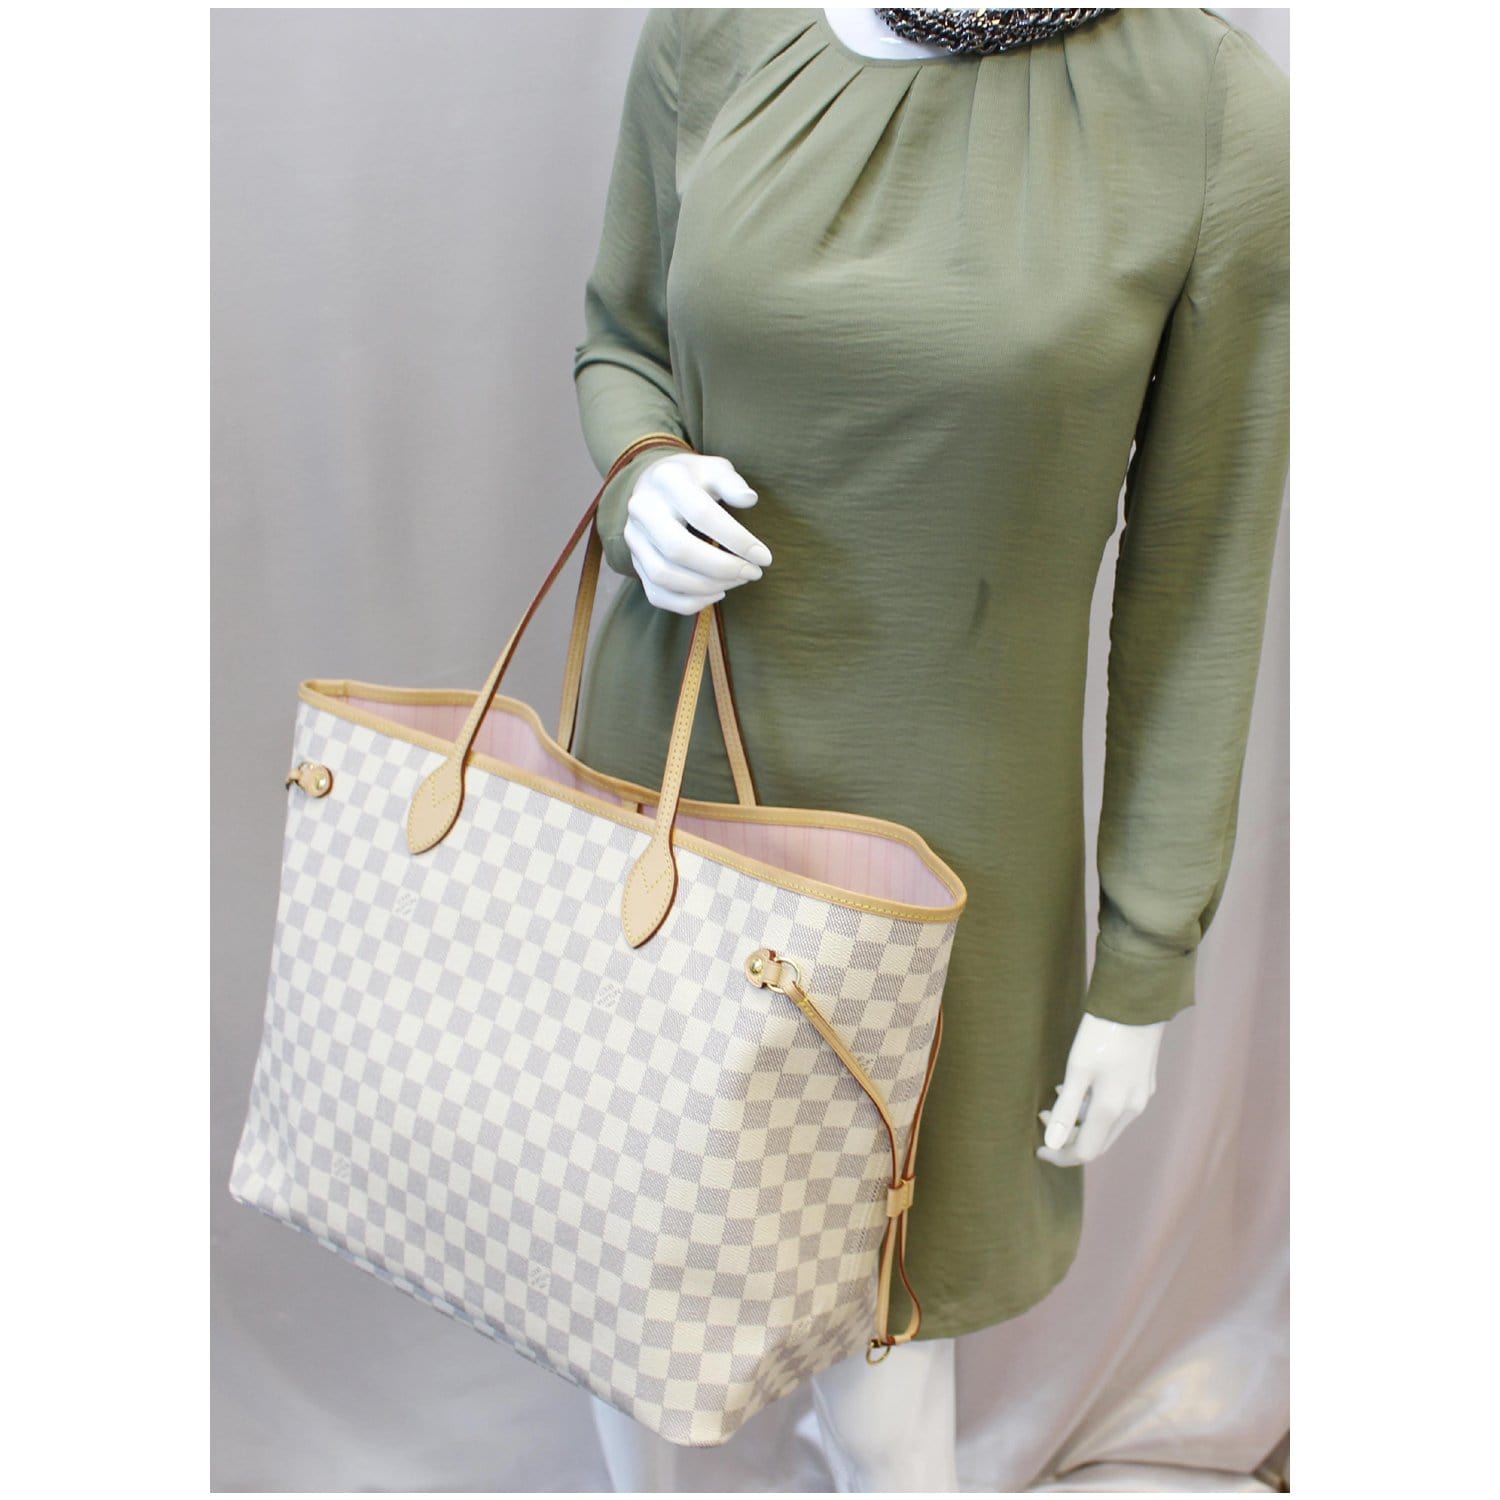 Vuitton neverfull gm damier Azur rose ballerine  Vintage louis vuitton  handbags, Vuitton bag, Louis vuitton bag